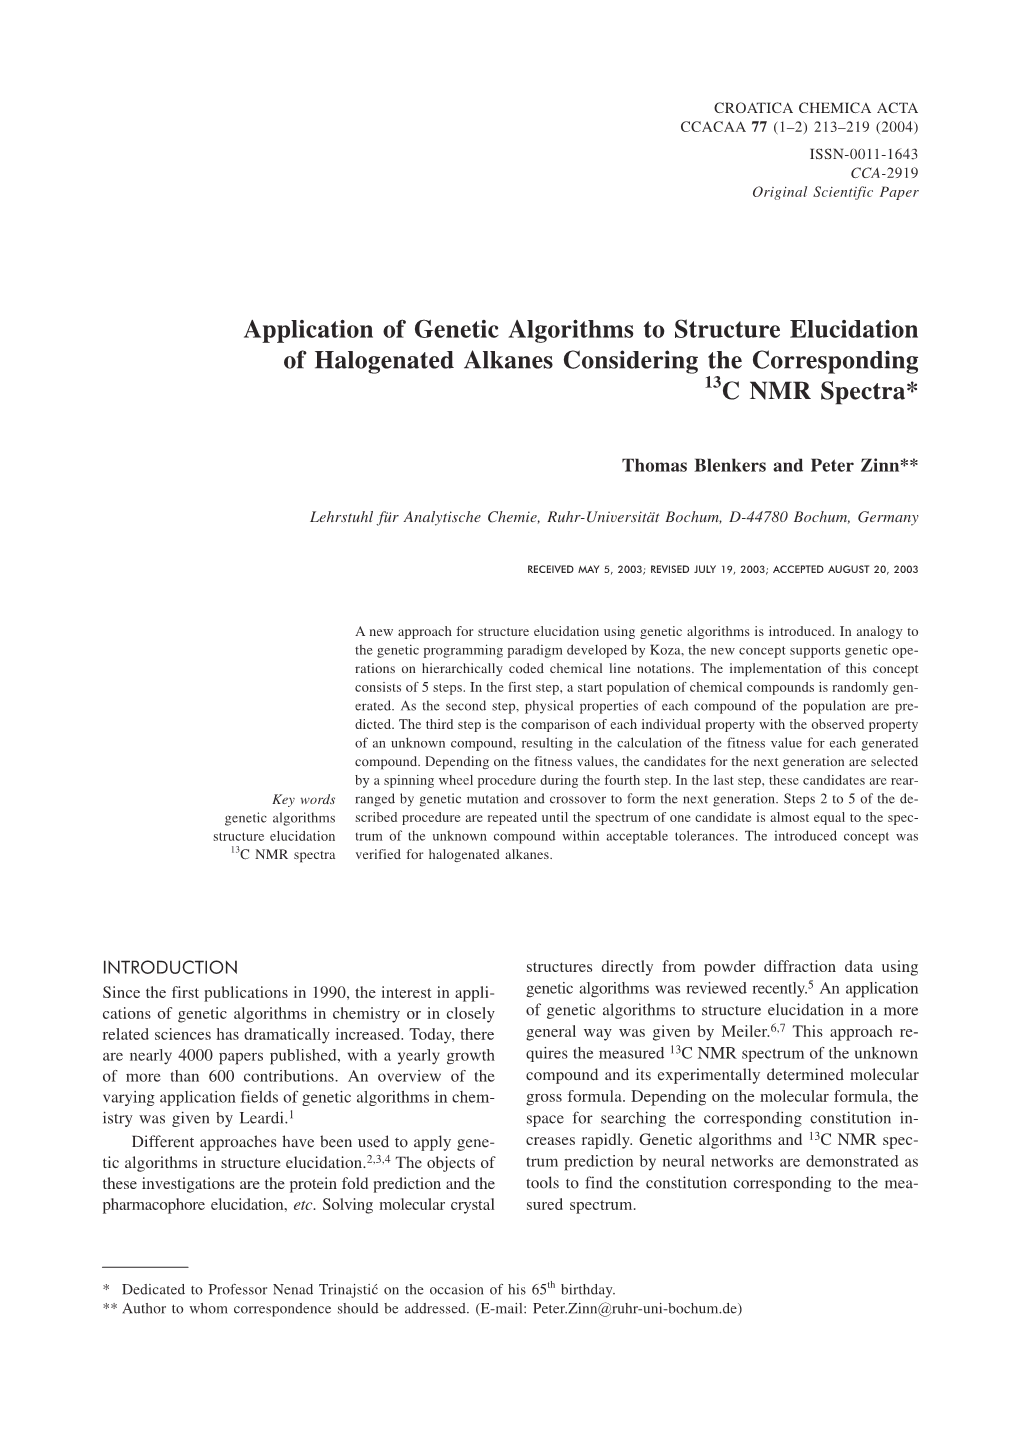 Application of Genetic Algorithms to Structure Elucidation of Halogenated Alkanes Considering the Corresponding C NMR Spectra*